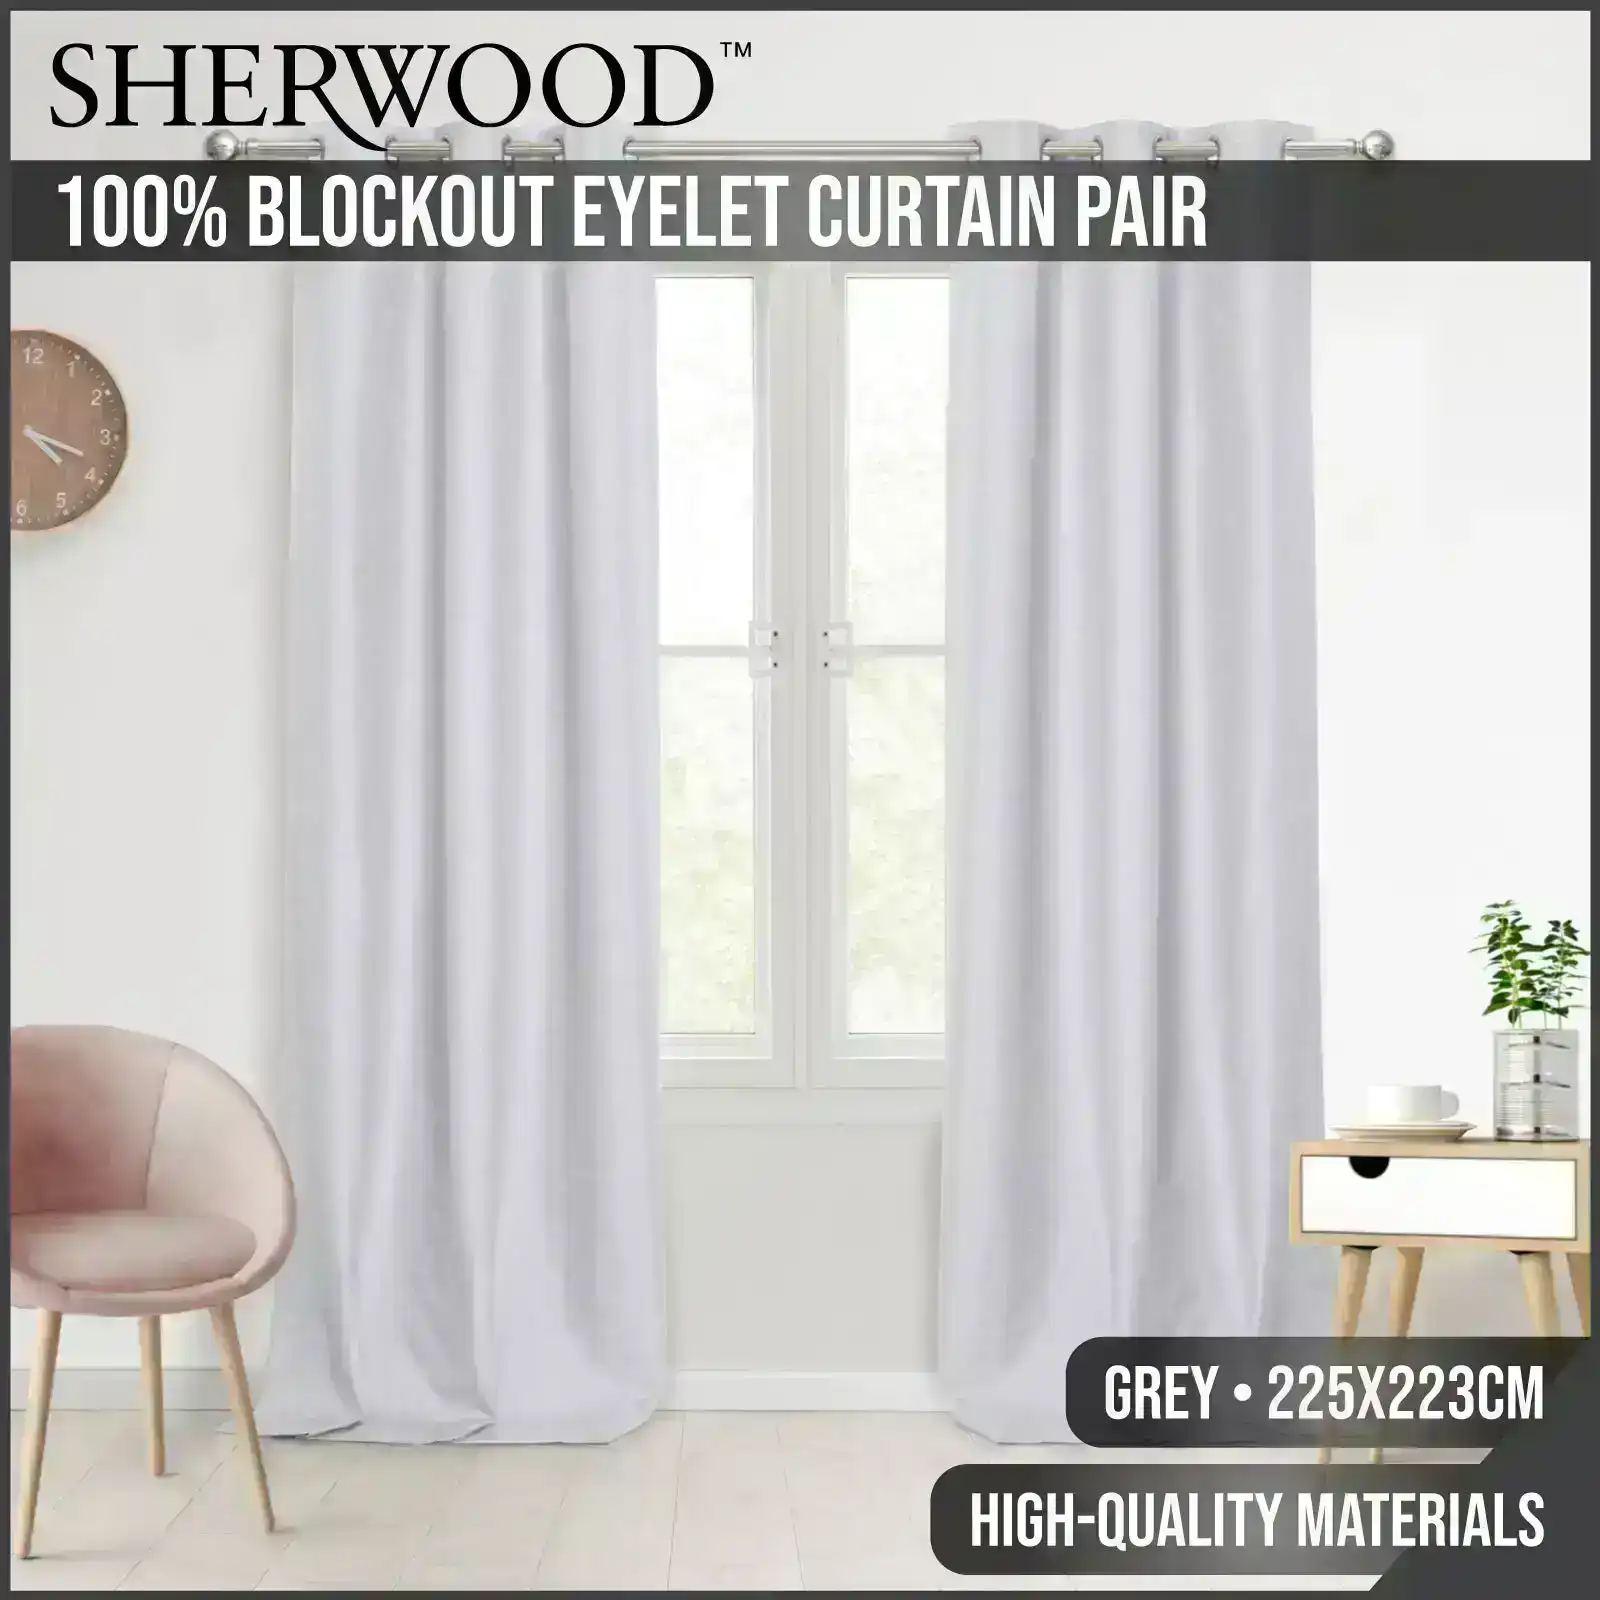 Sherwood Home 100% Blockout Eyelet Curtain Pair Grey 225x223cm